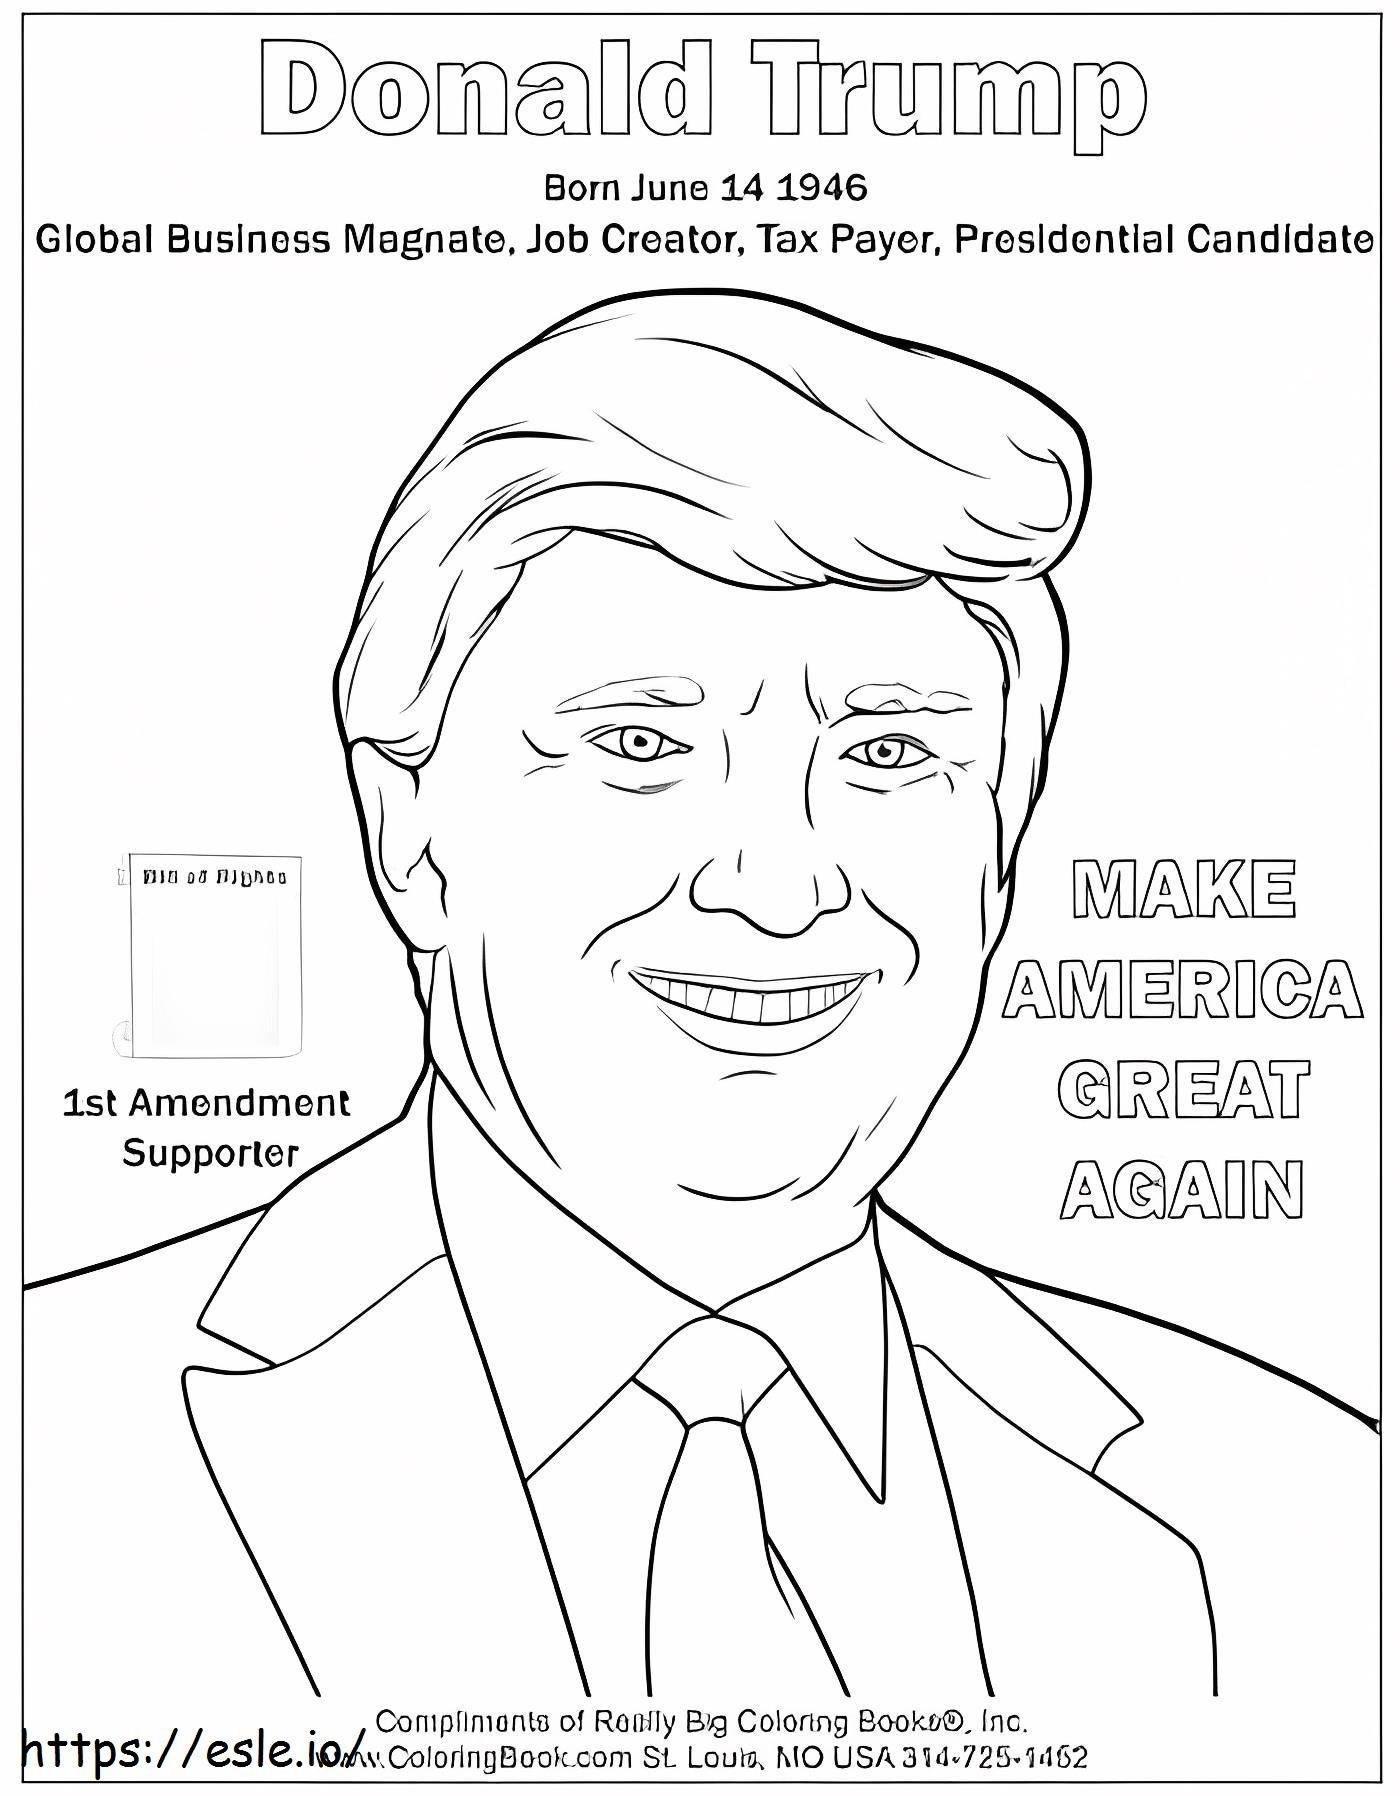  Strona Donalda Trumpa kolorowanka